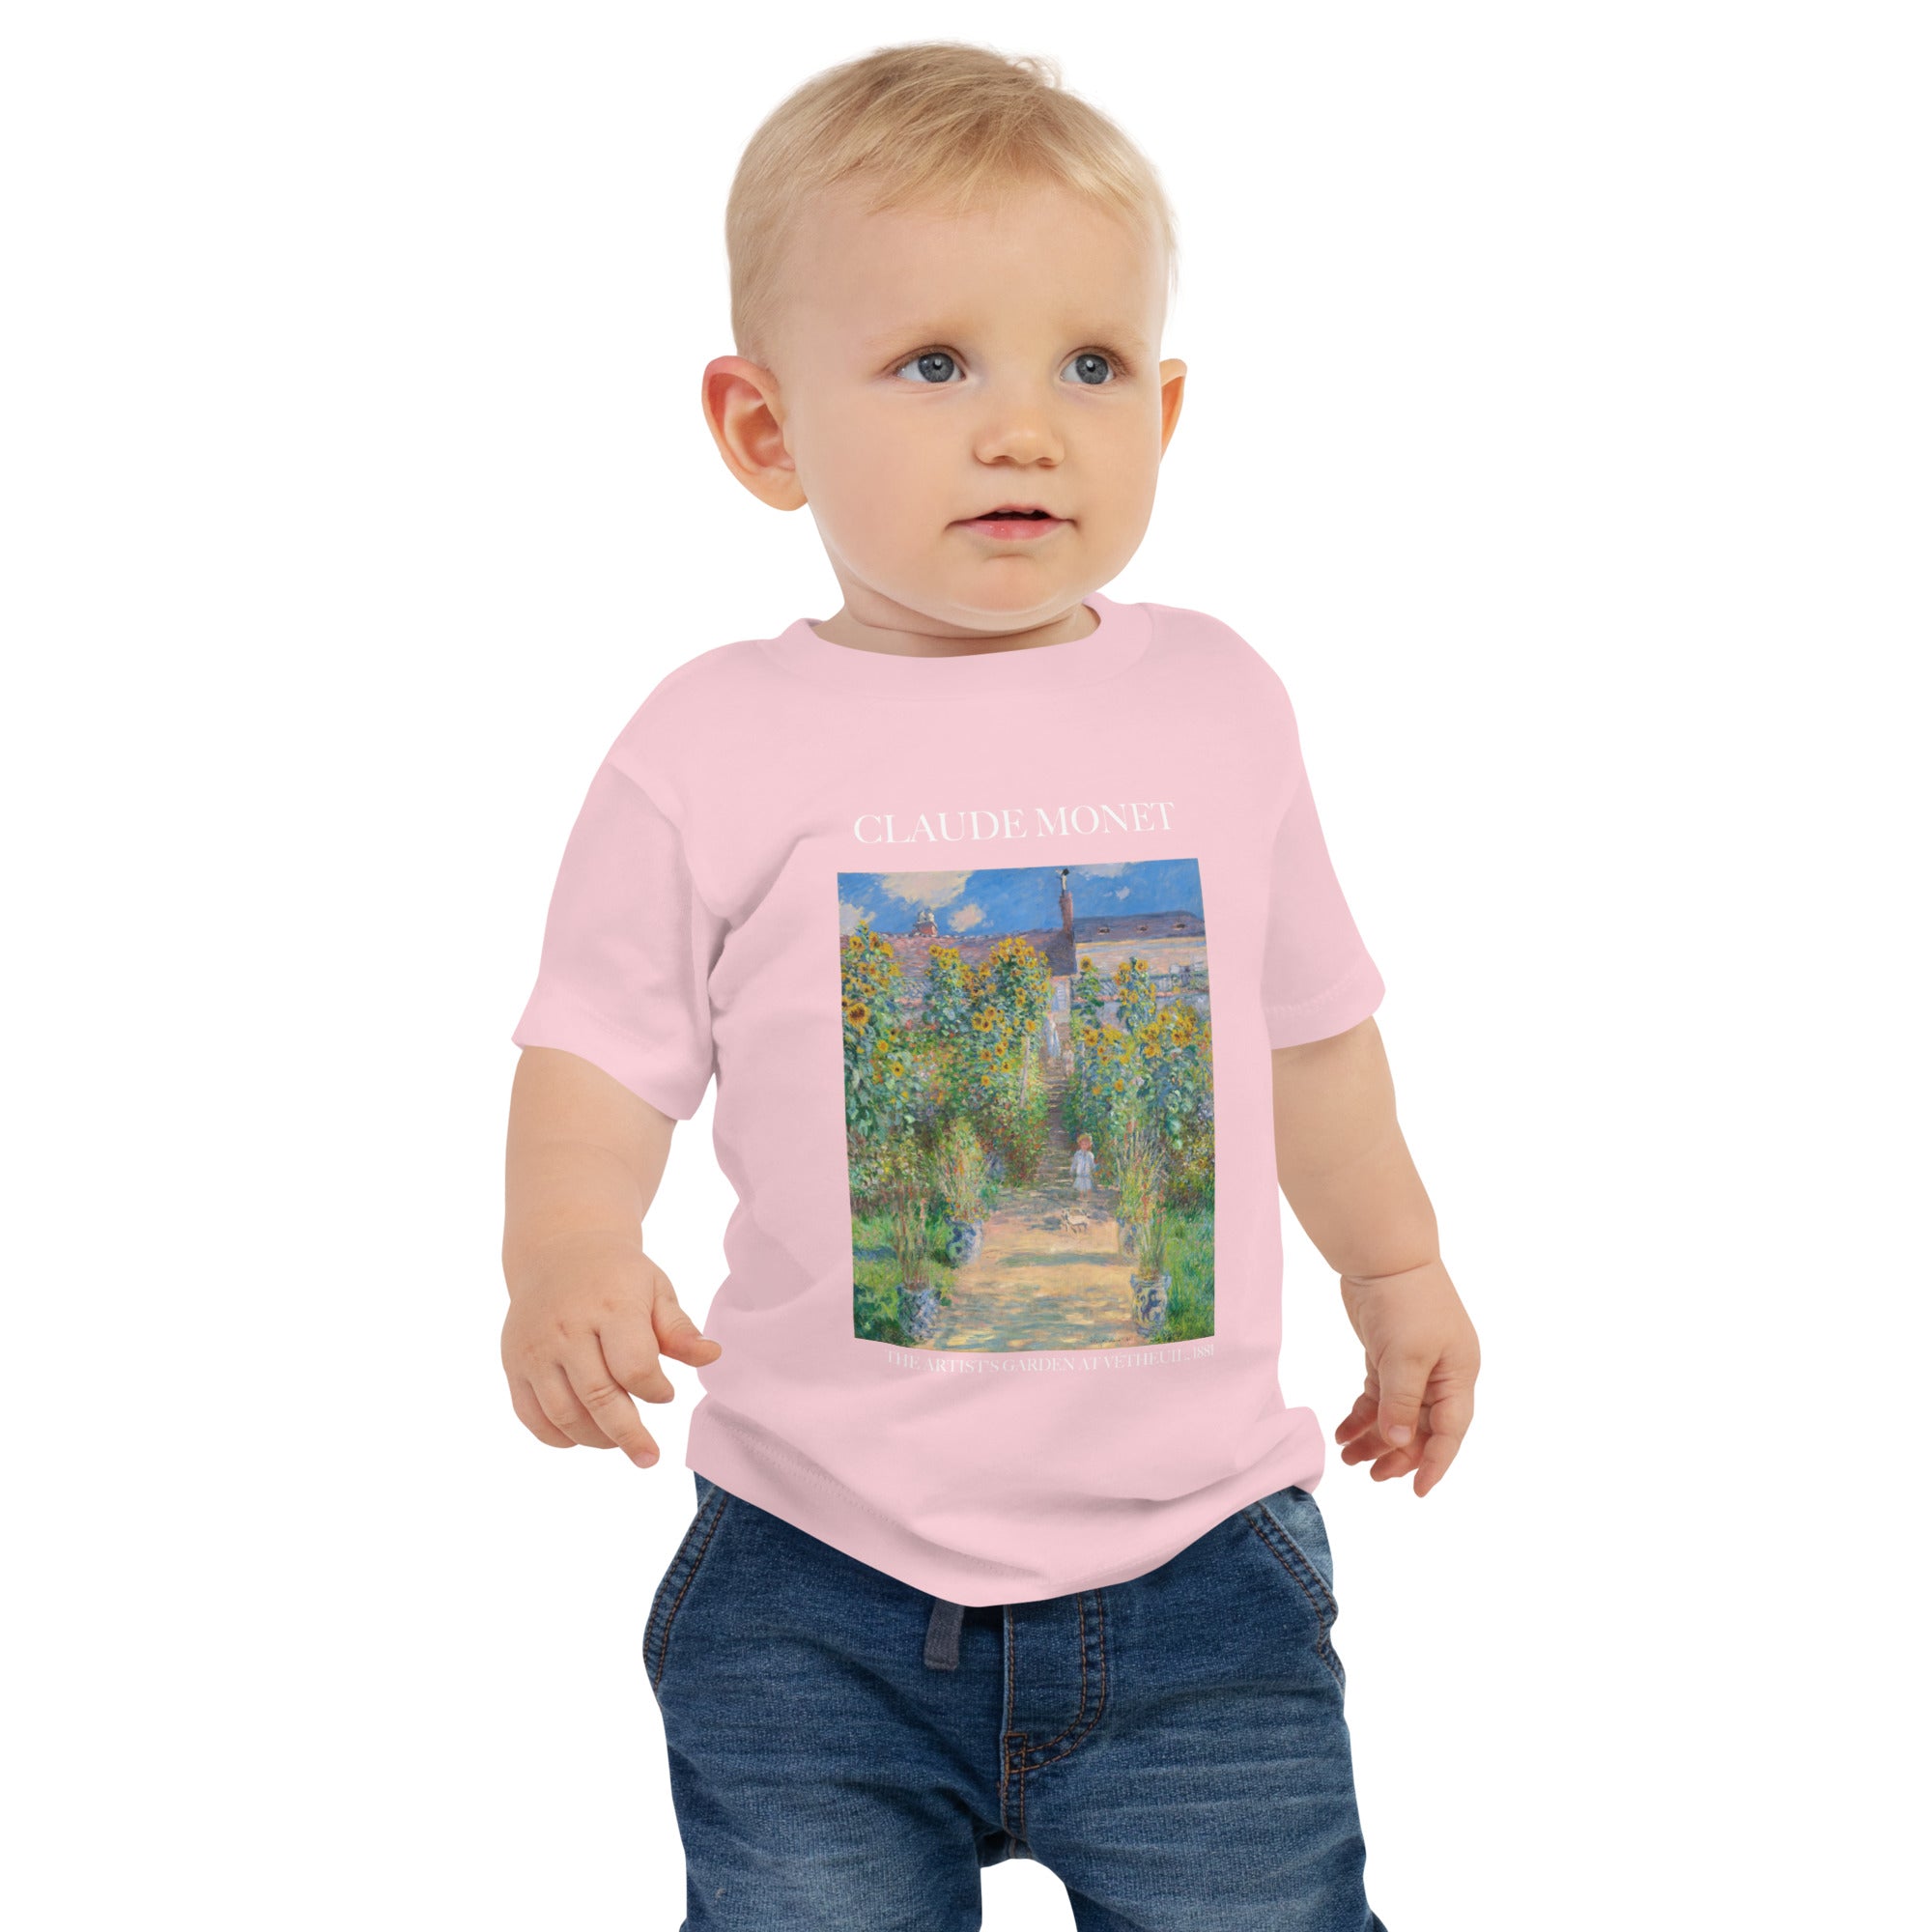 Claude Monet 'The Artist's Garden at Vétheuil' Famous Painting Baby Staple T-Shirt | Premium Baby Art Tee